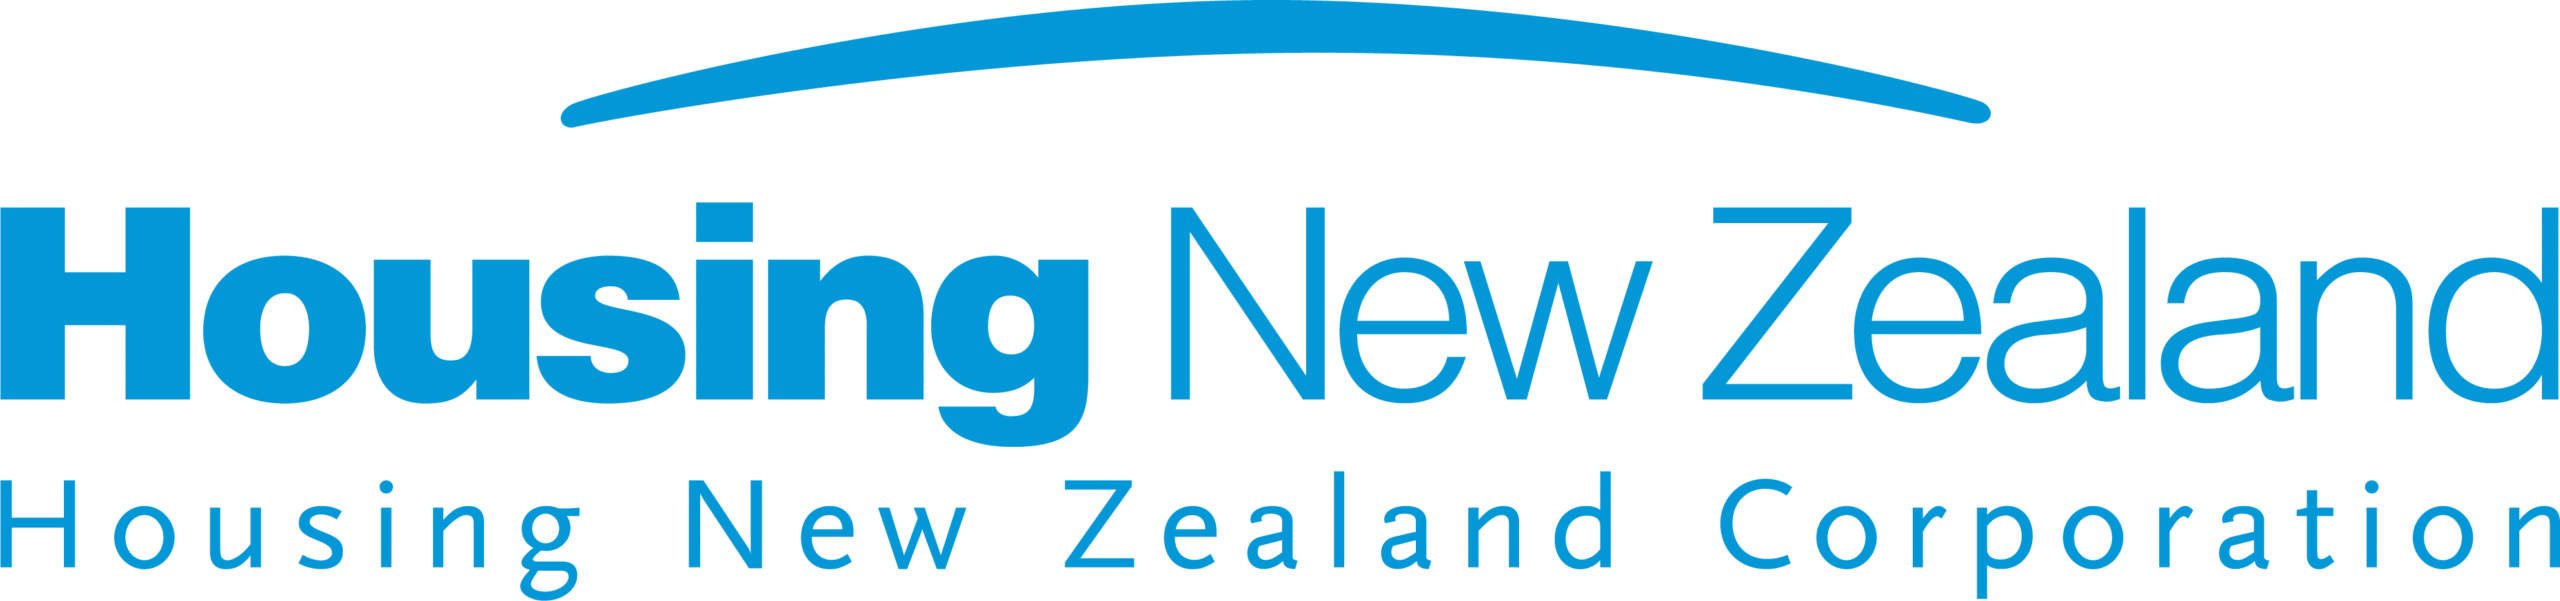 Housing_New_Zealand_Corporation_Logo_2017